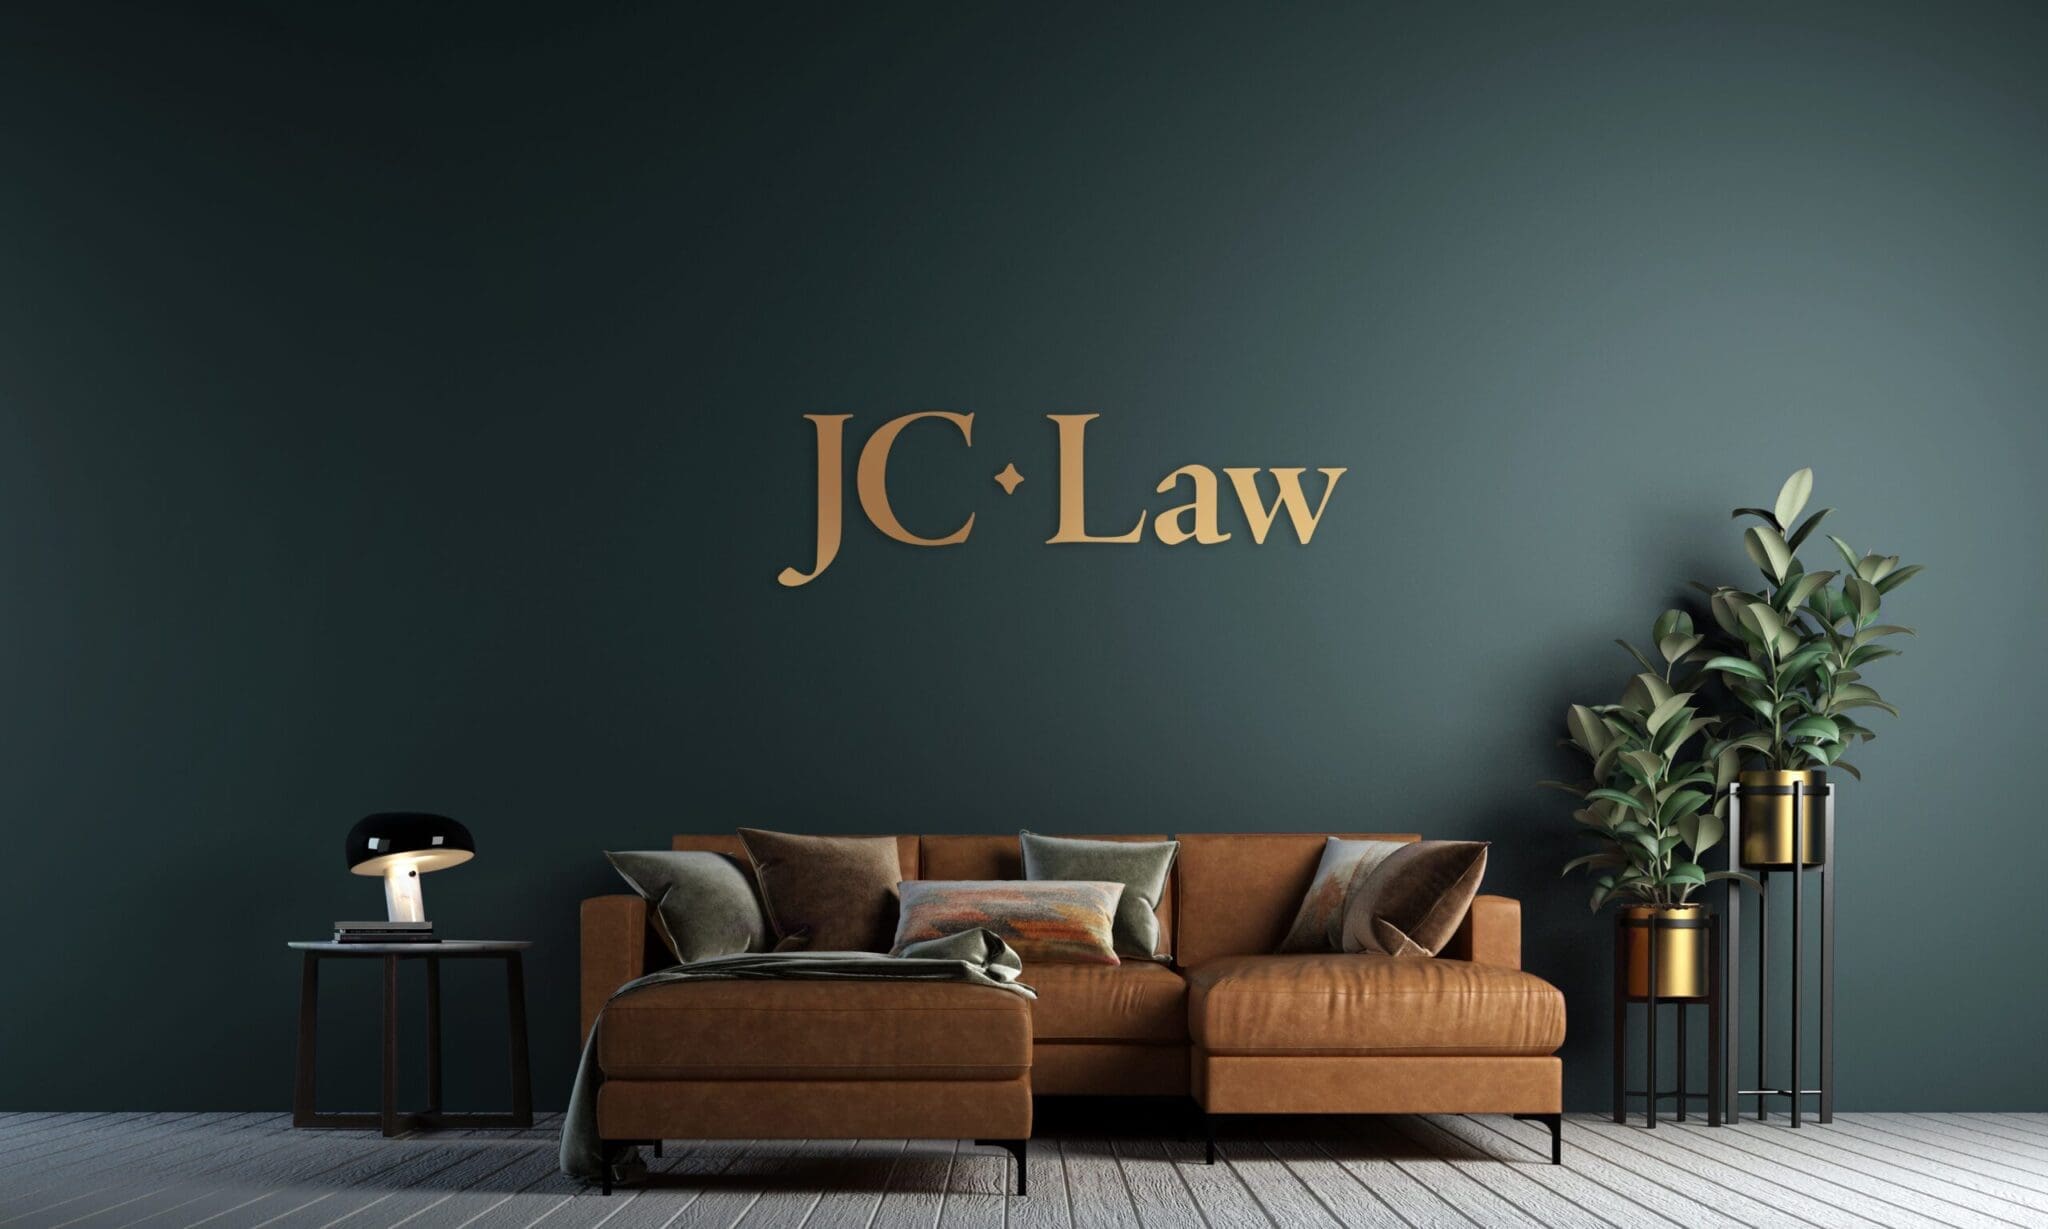 jc law logo on green wall